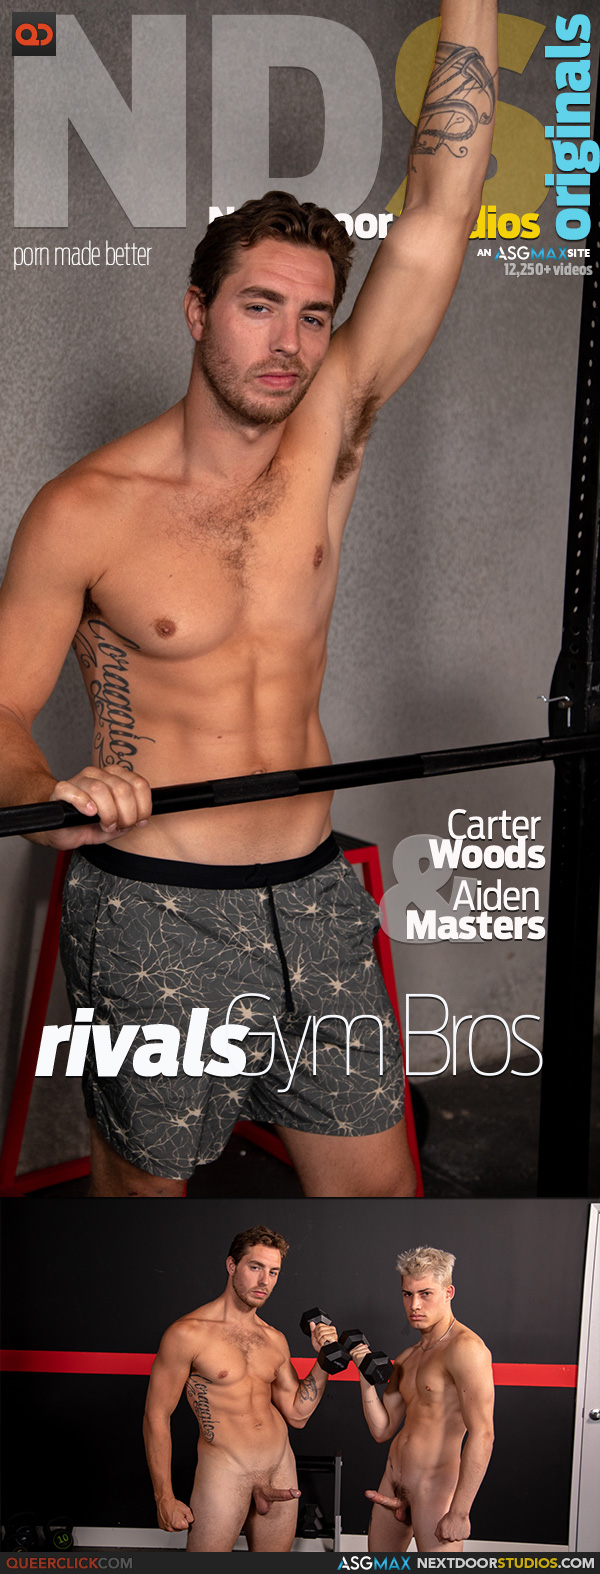 ASGMax | NextDoorStudios: Carter Woods and Aiden Masters - Rivals: Gym Bros